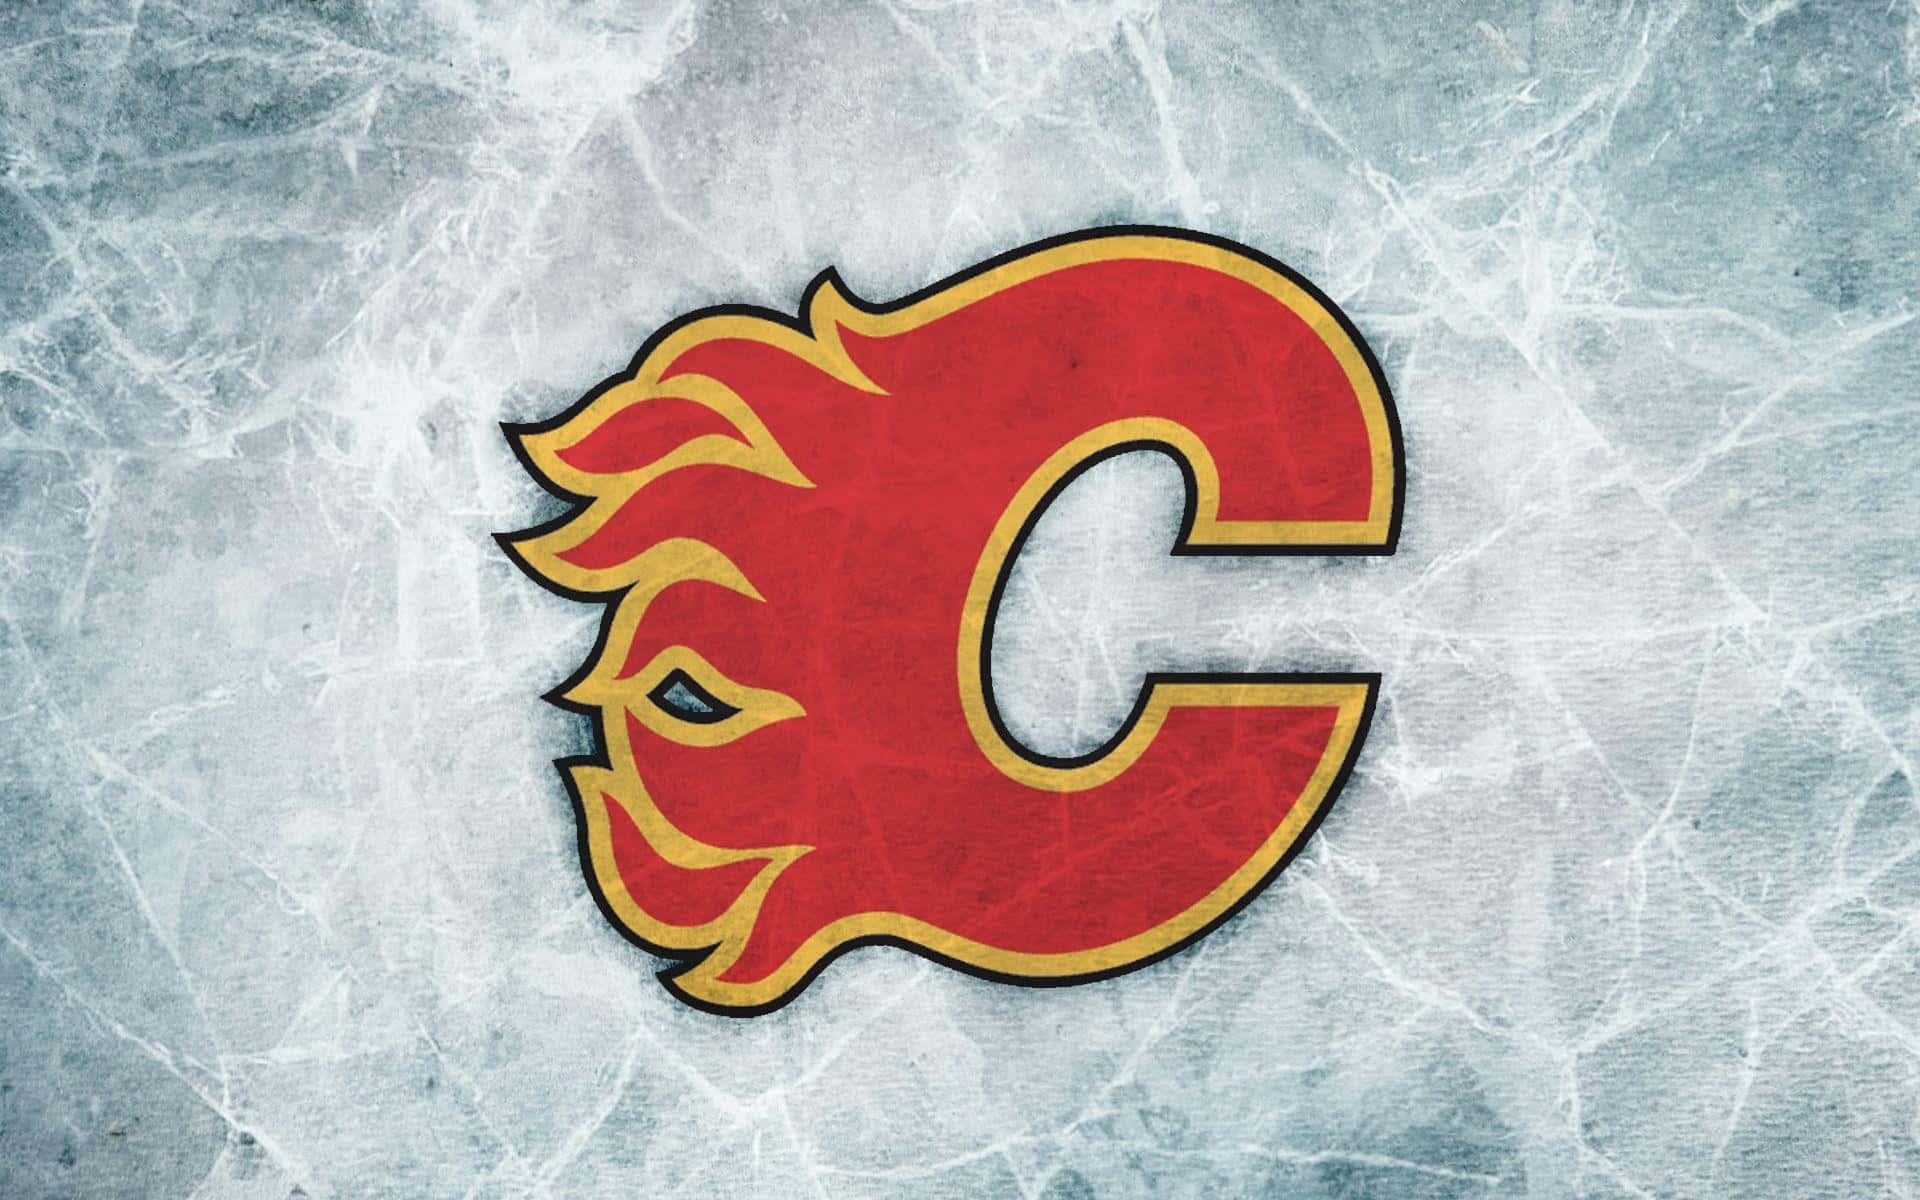 Unlogo Dei Calgary Flames Sul Ghiaccio